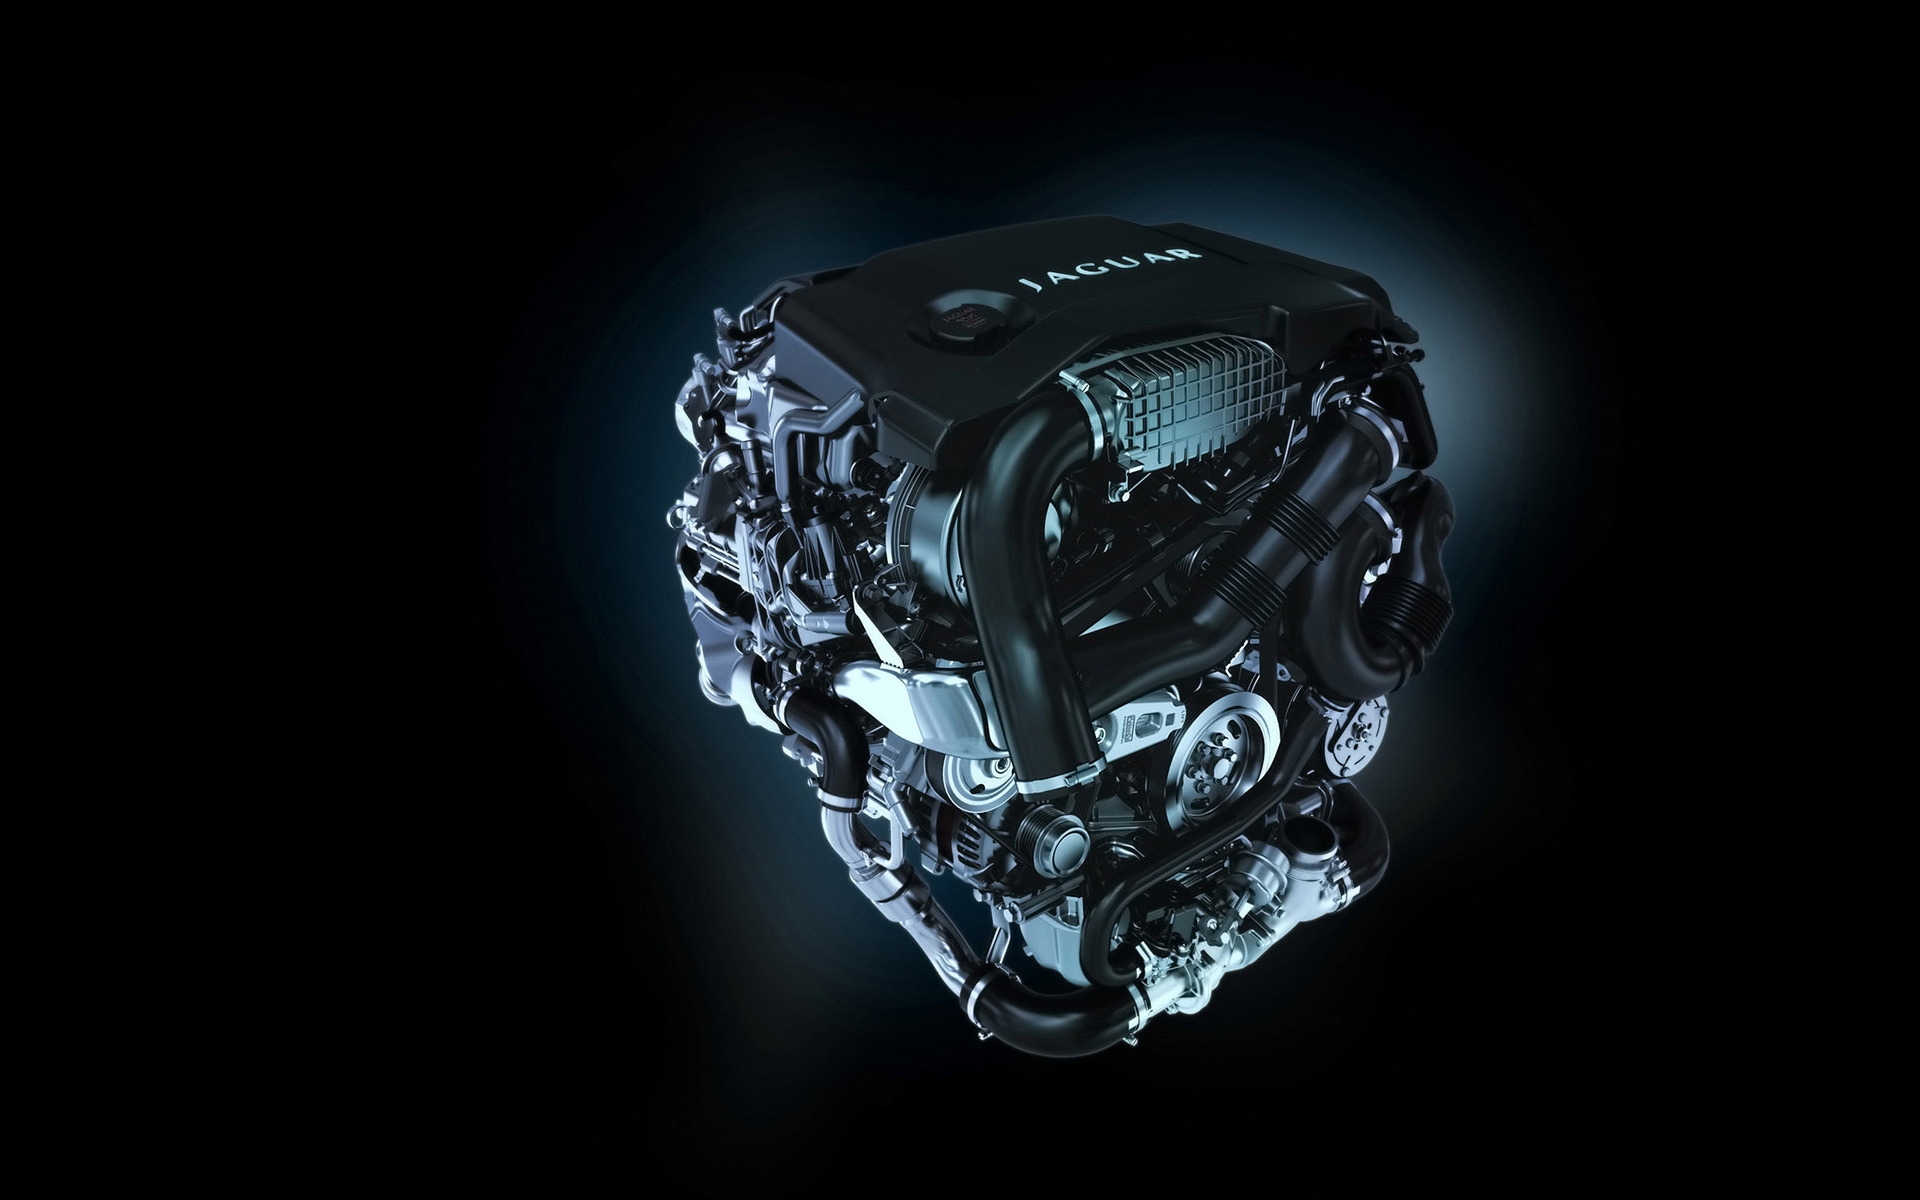 Jaguar XF Diesel S Engine for 1920 x 1200 widescreen resolution